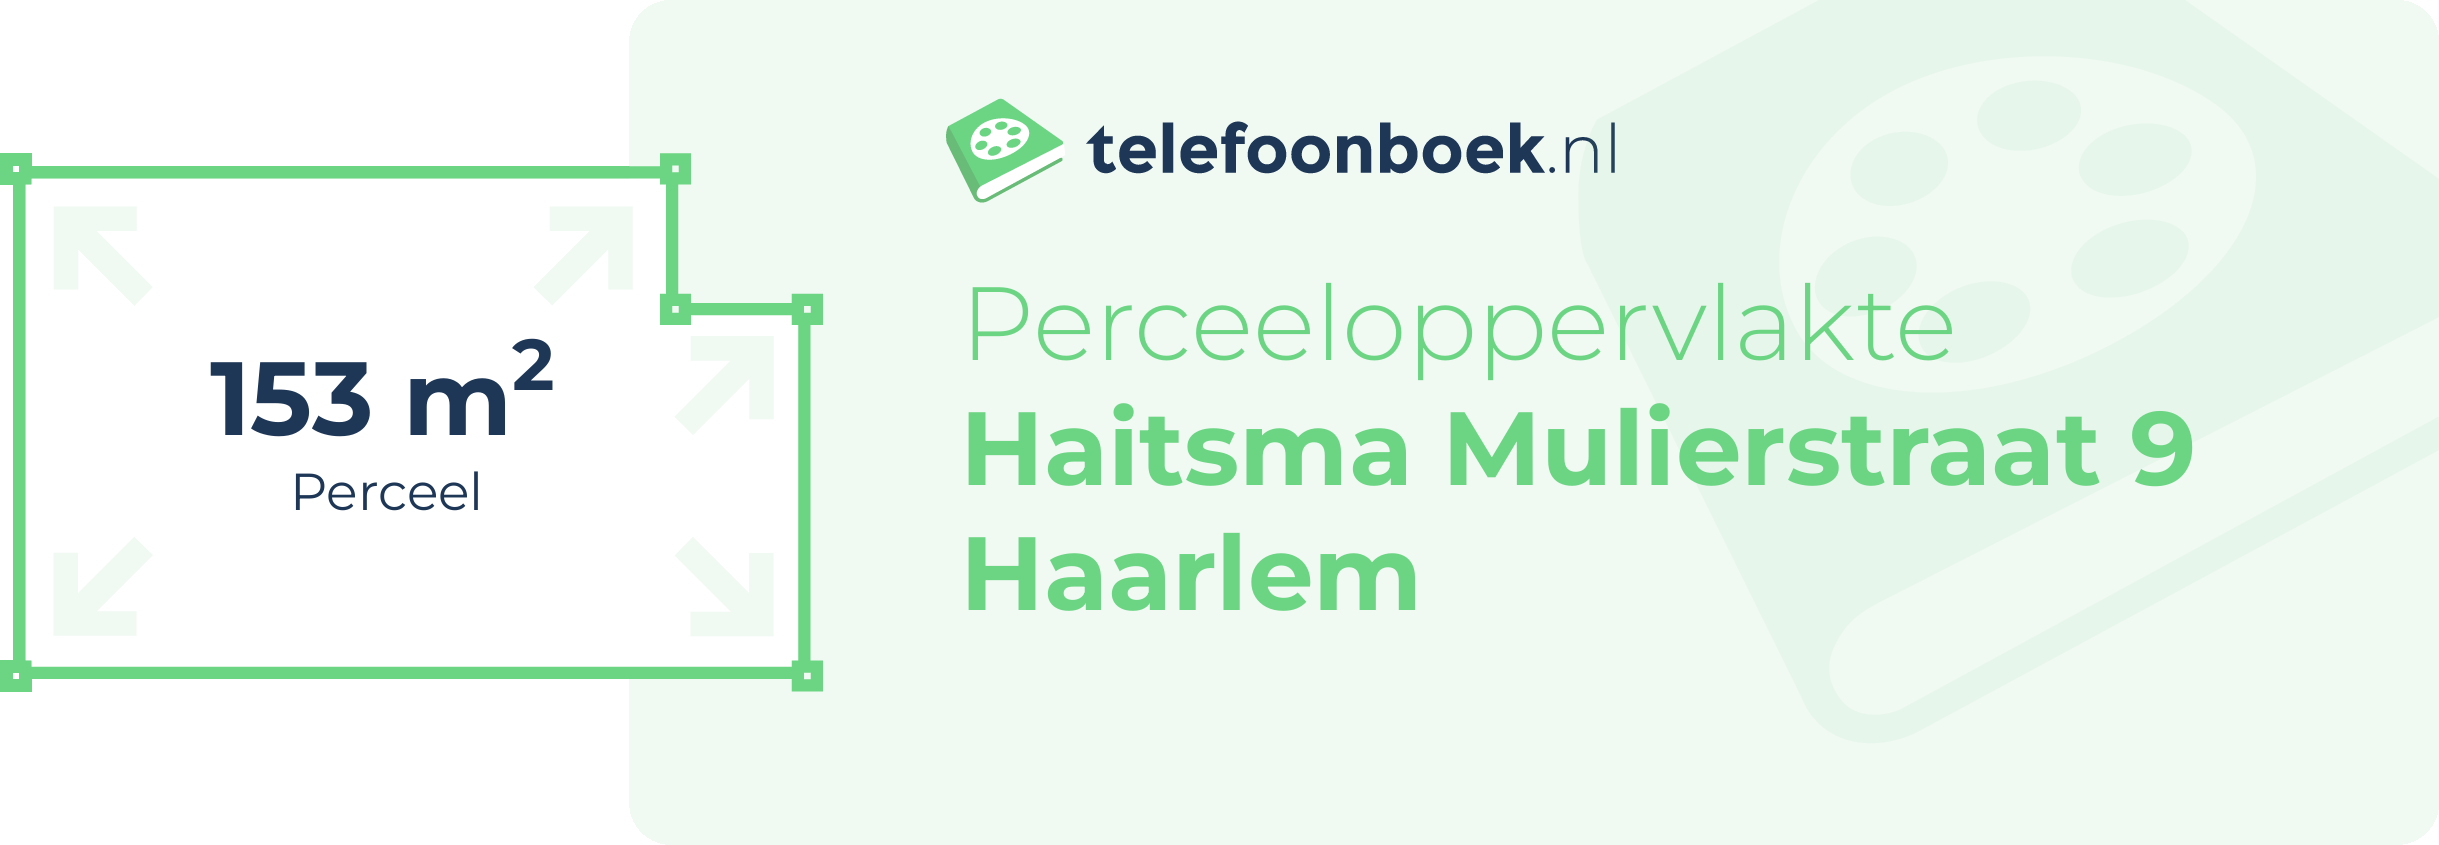 Perceeloppervlakte Haitsma Mulierstraat 9 Haarlem